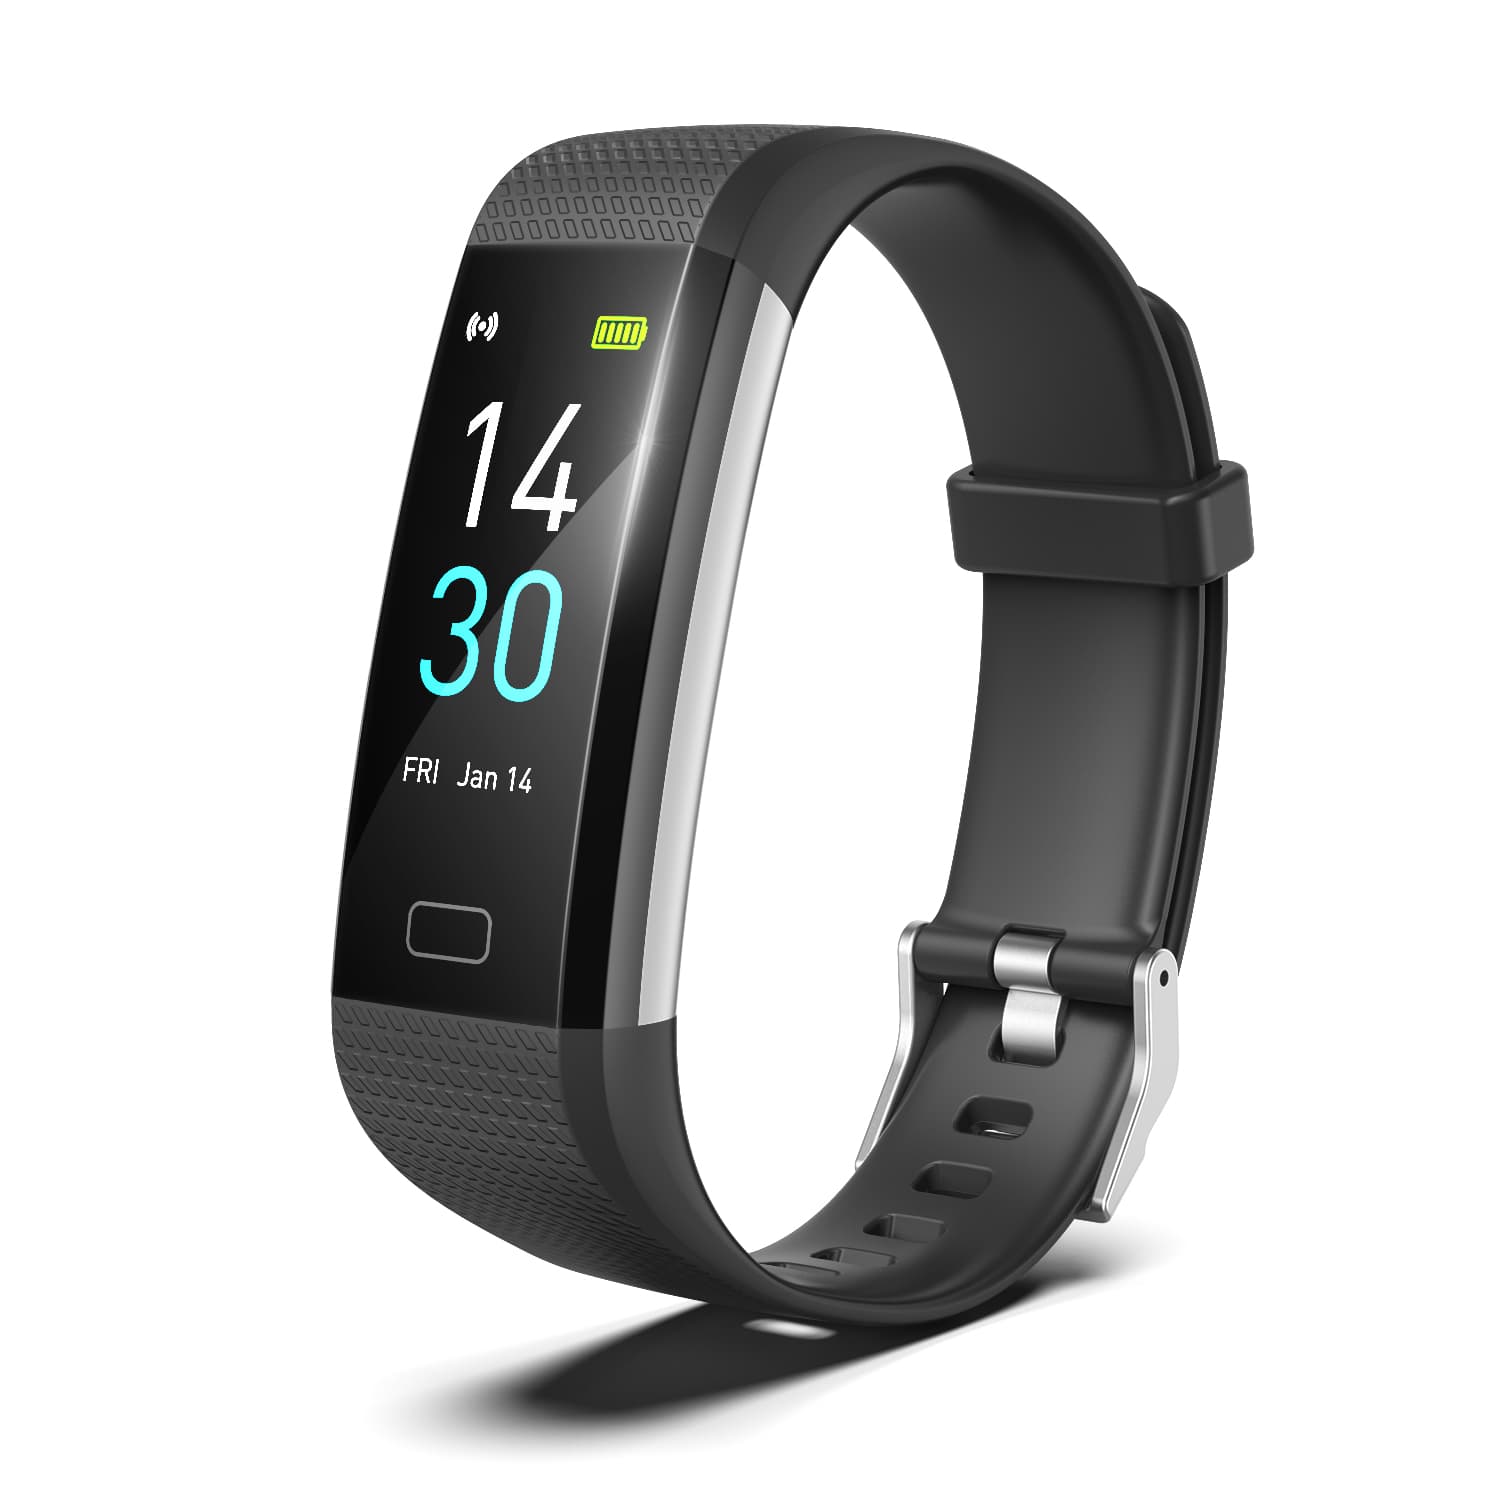  Pro-Fit Go VeryFitPro Smart Watch Activity Fitness